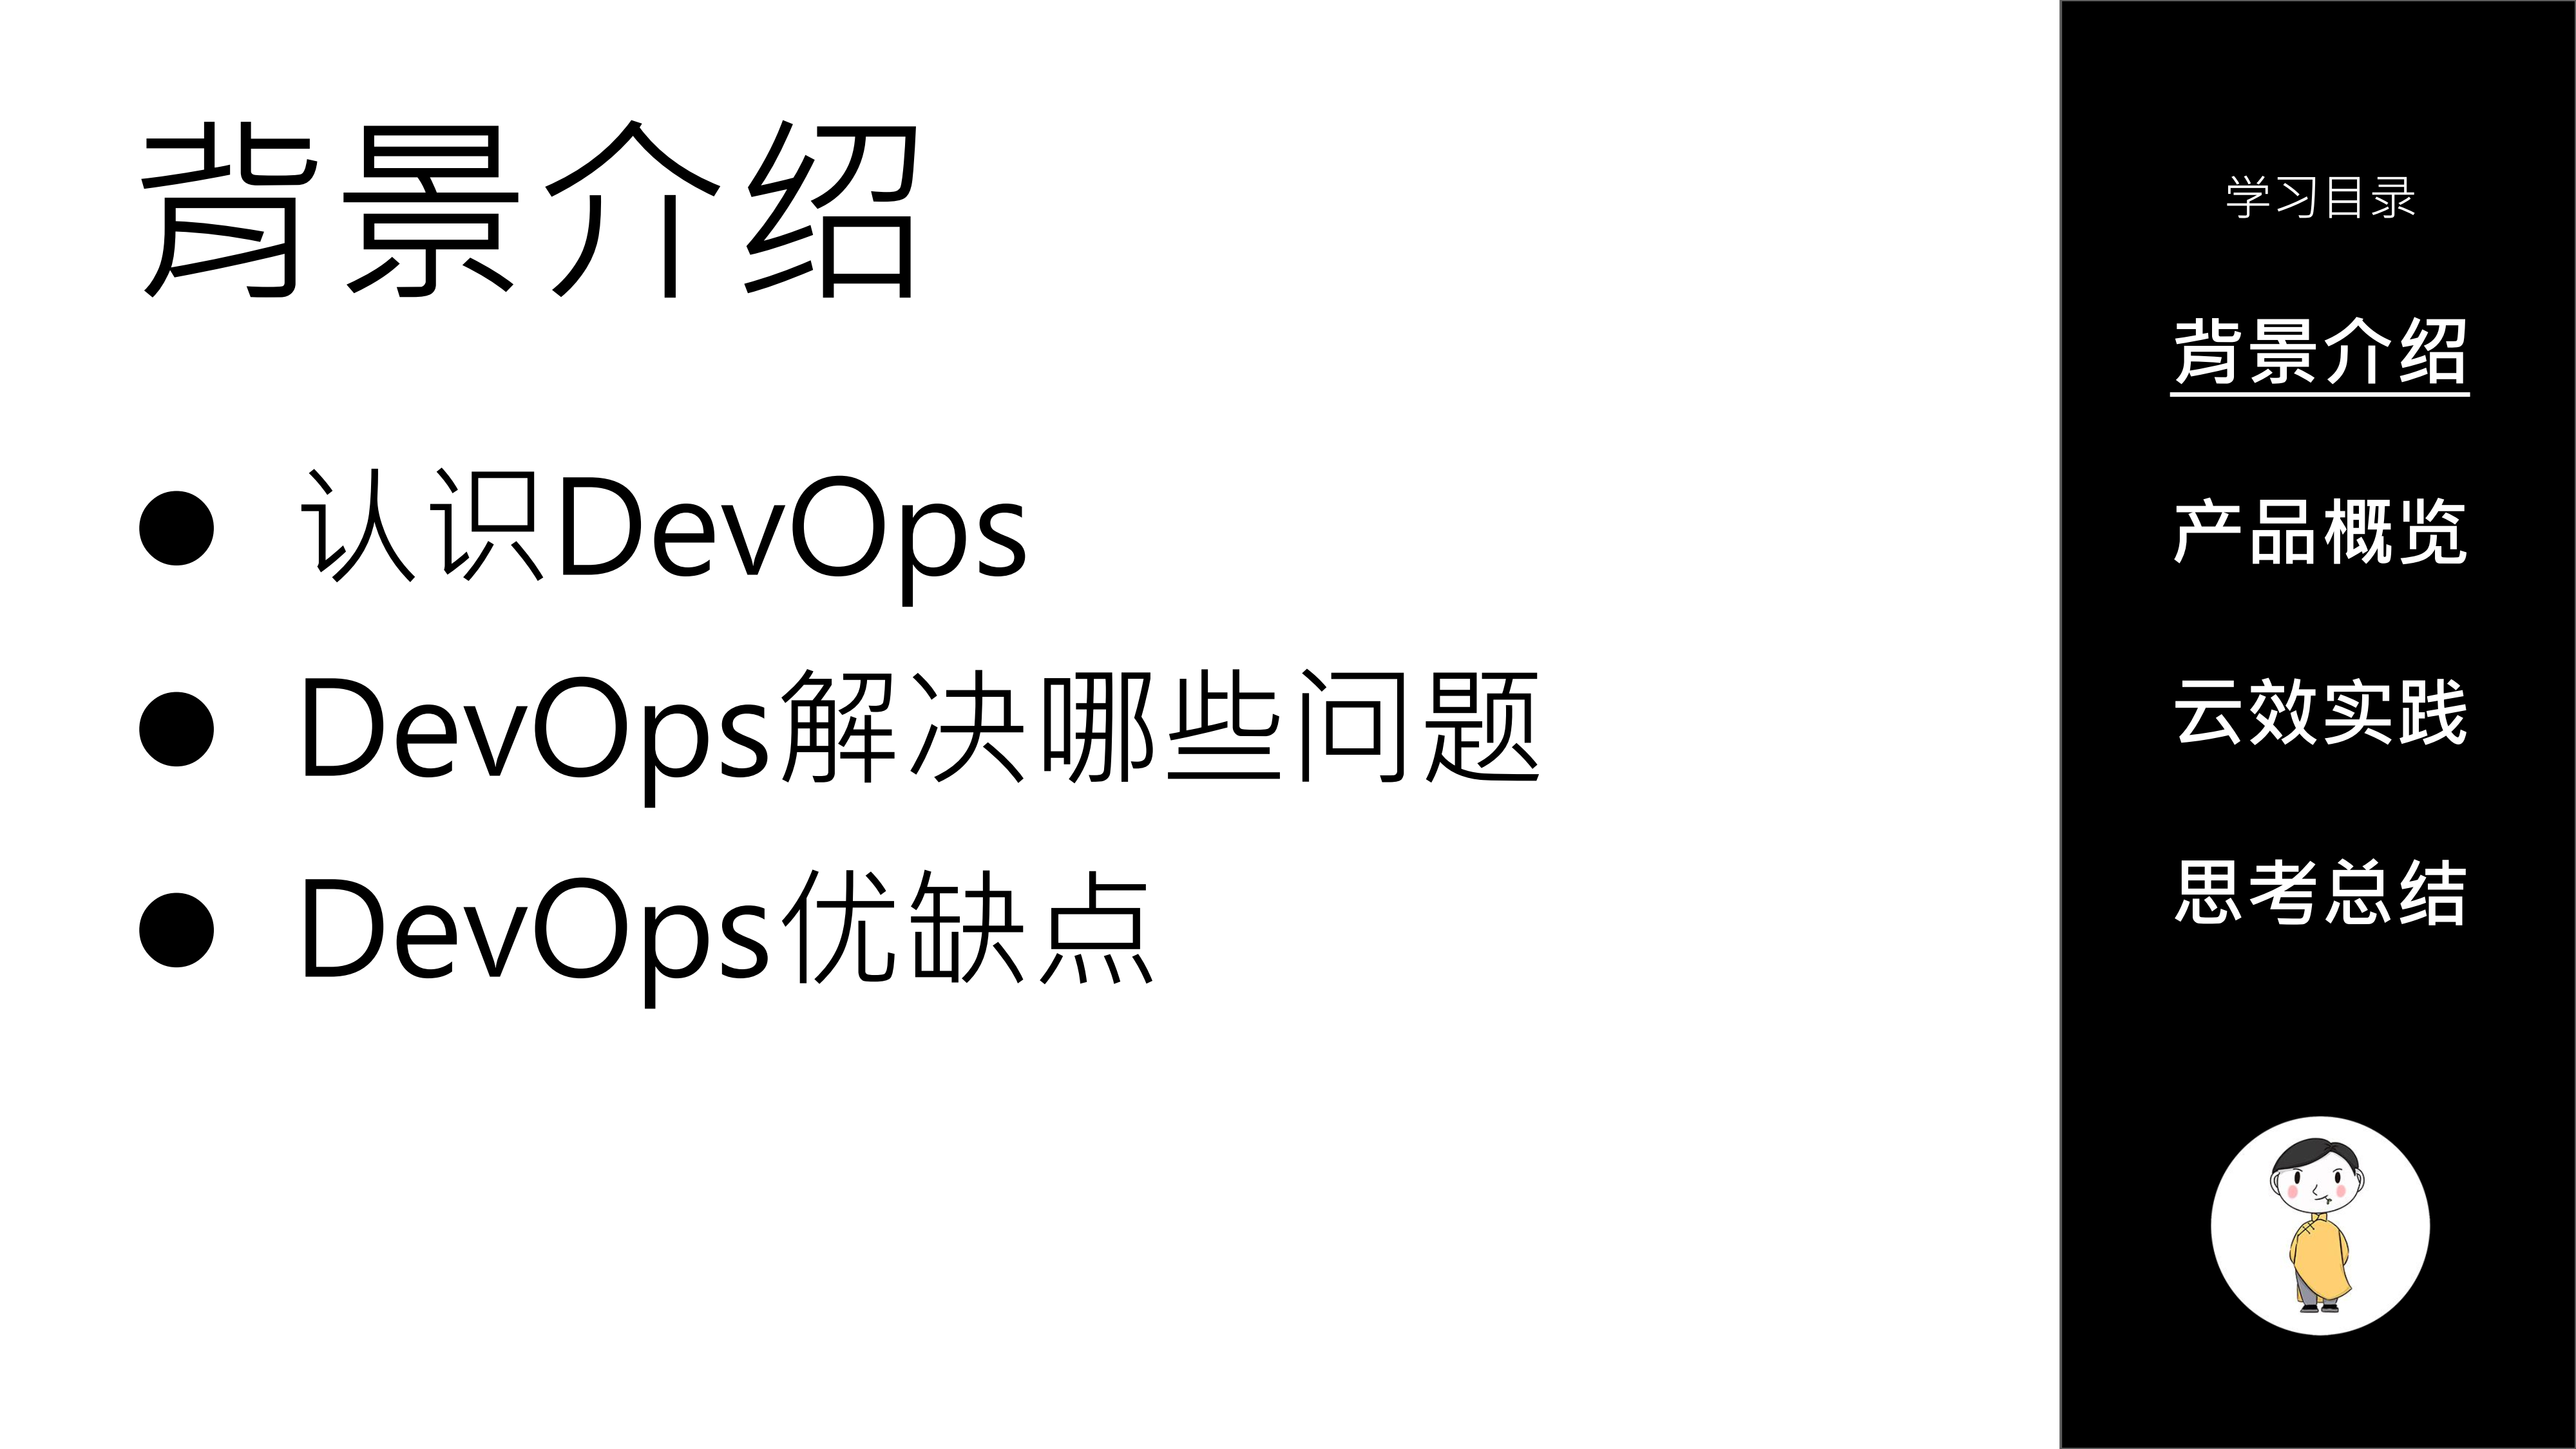 DevOps高效开发管理-云效实践初体验